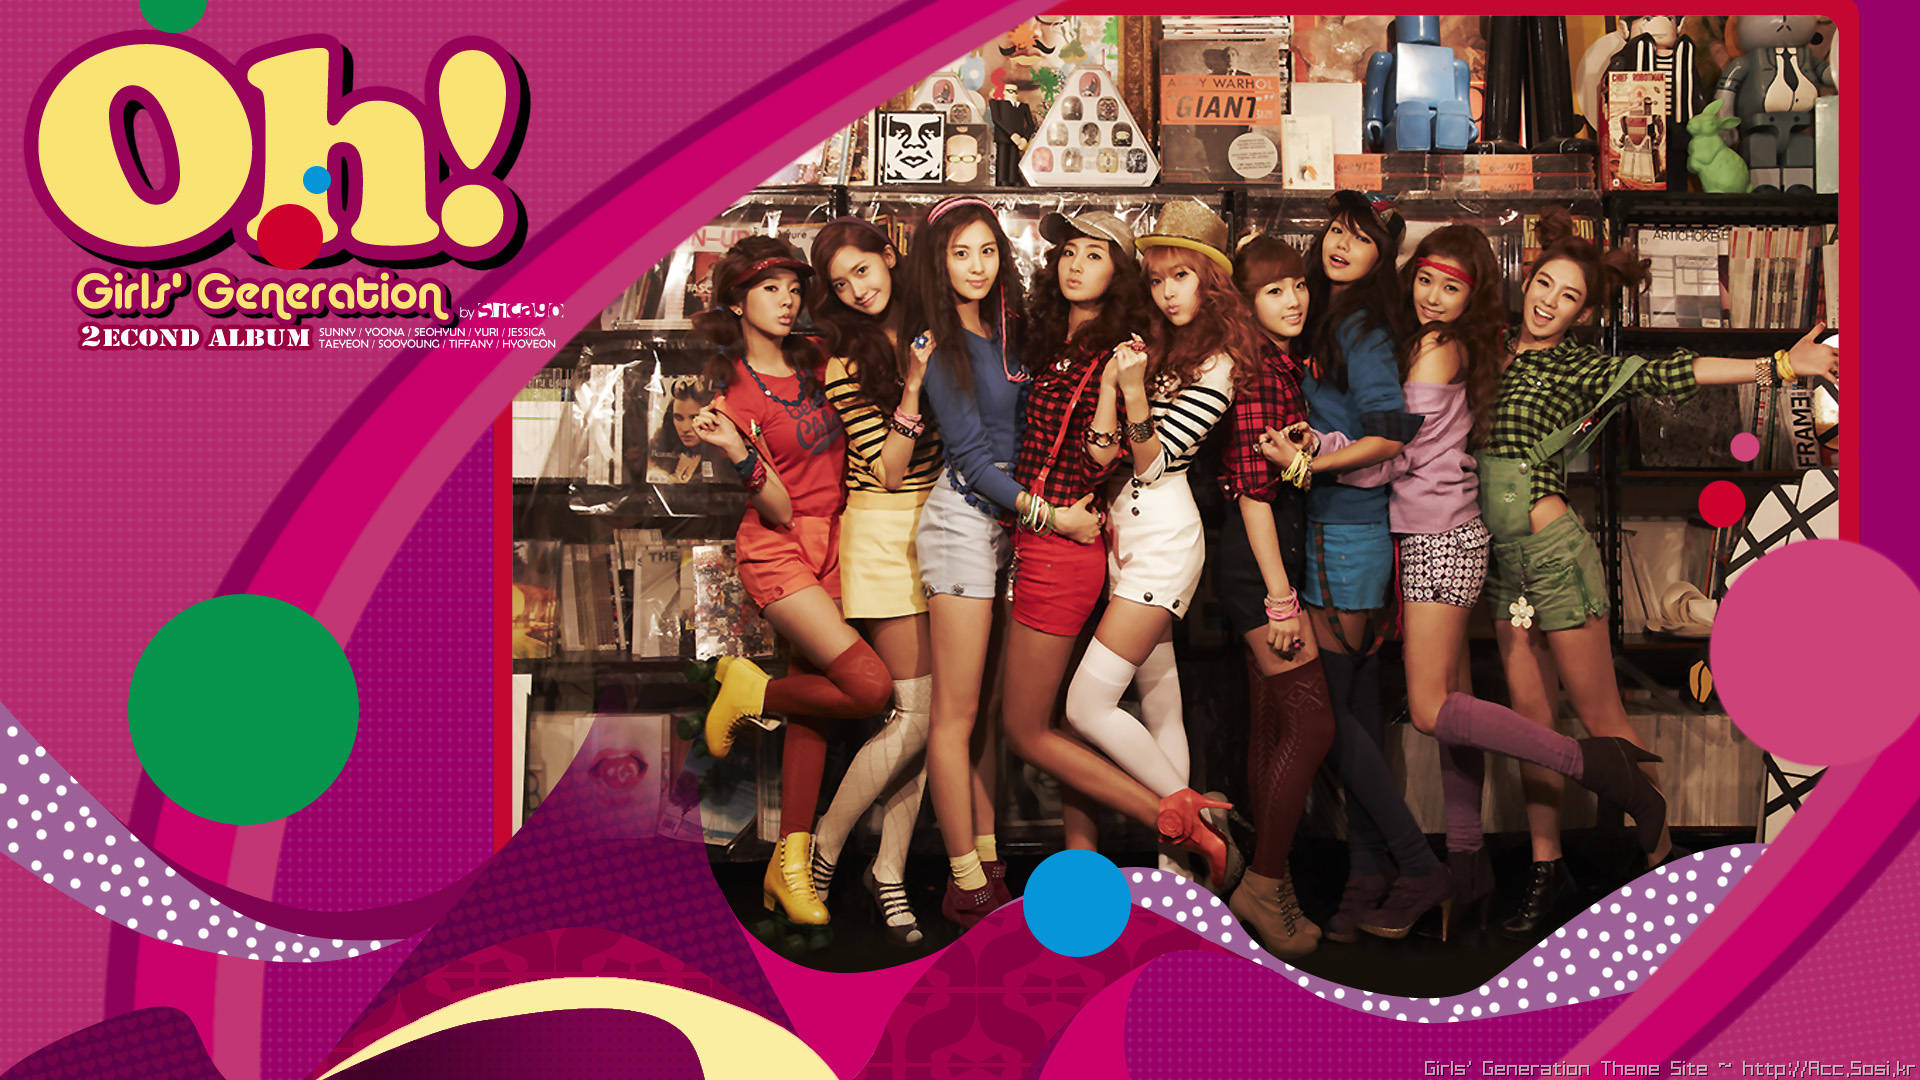 Plantation fravær Perennial Download Hd Girls' Generation Oh! Album Cover Wallpaper | Wallpapers.com